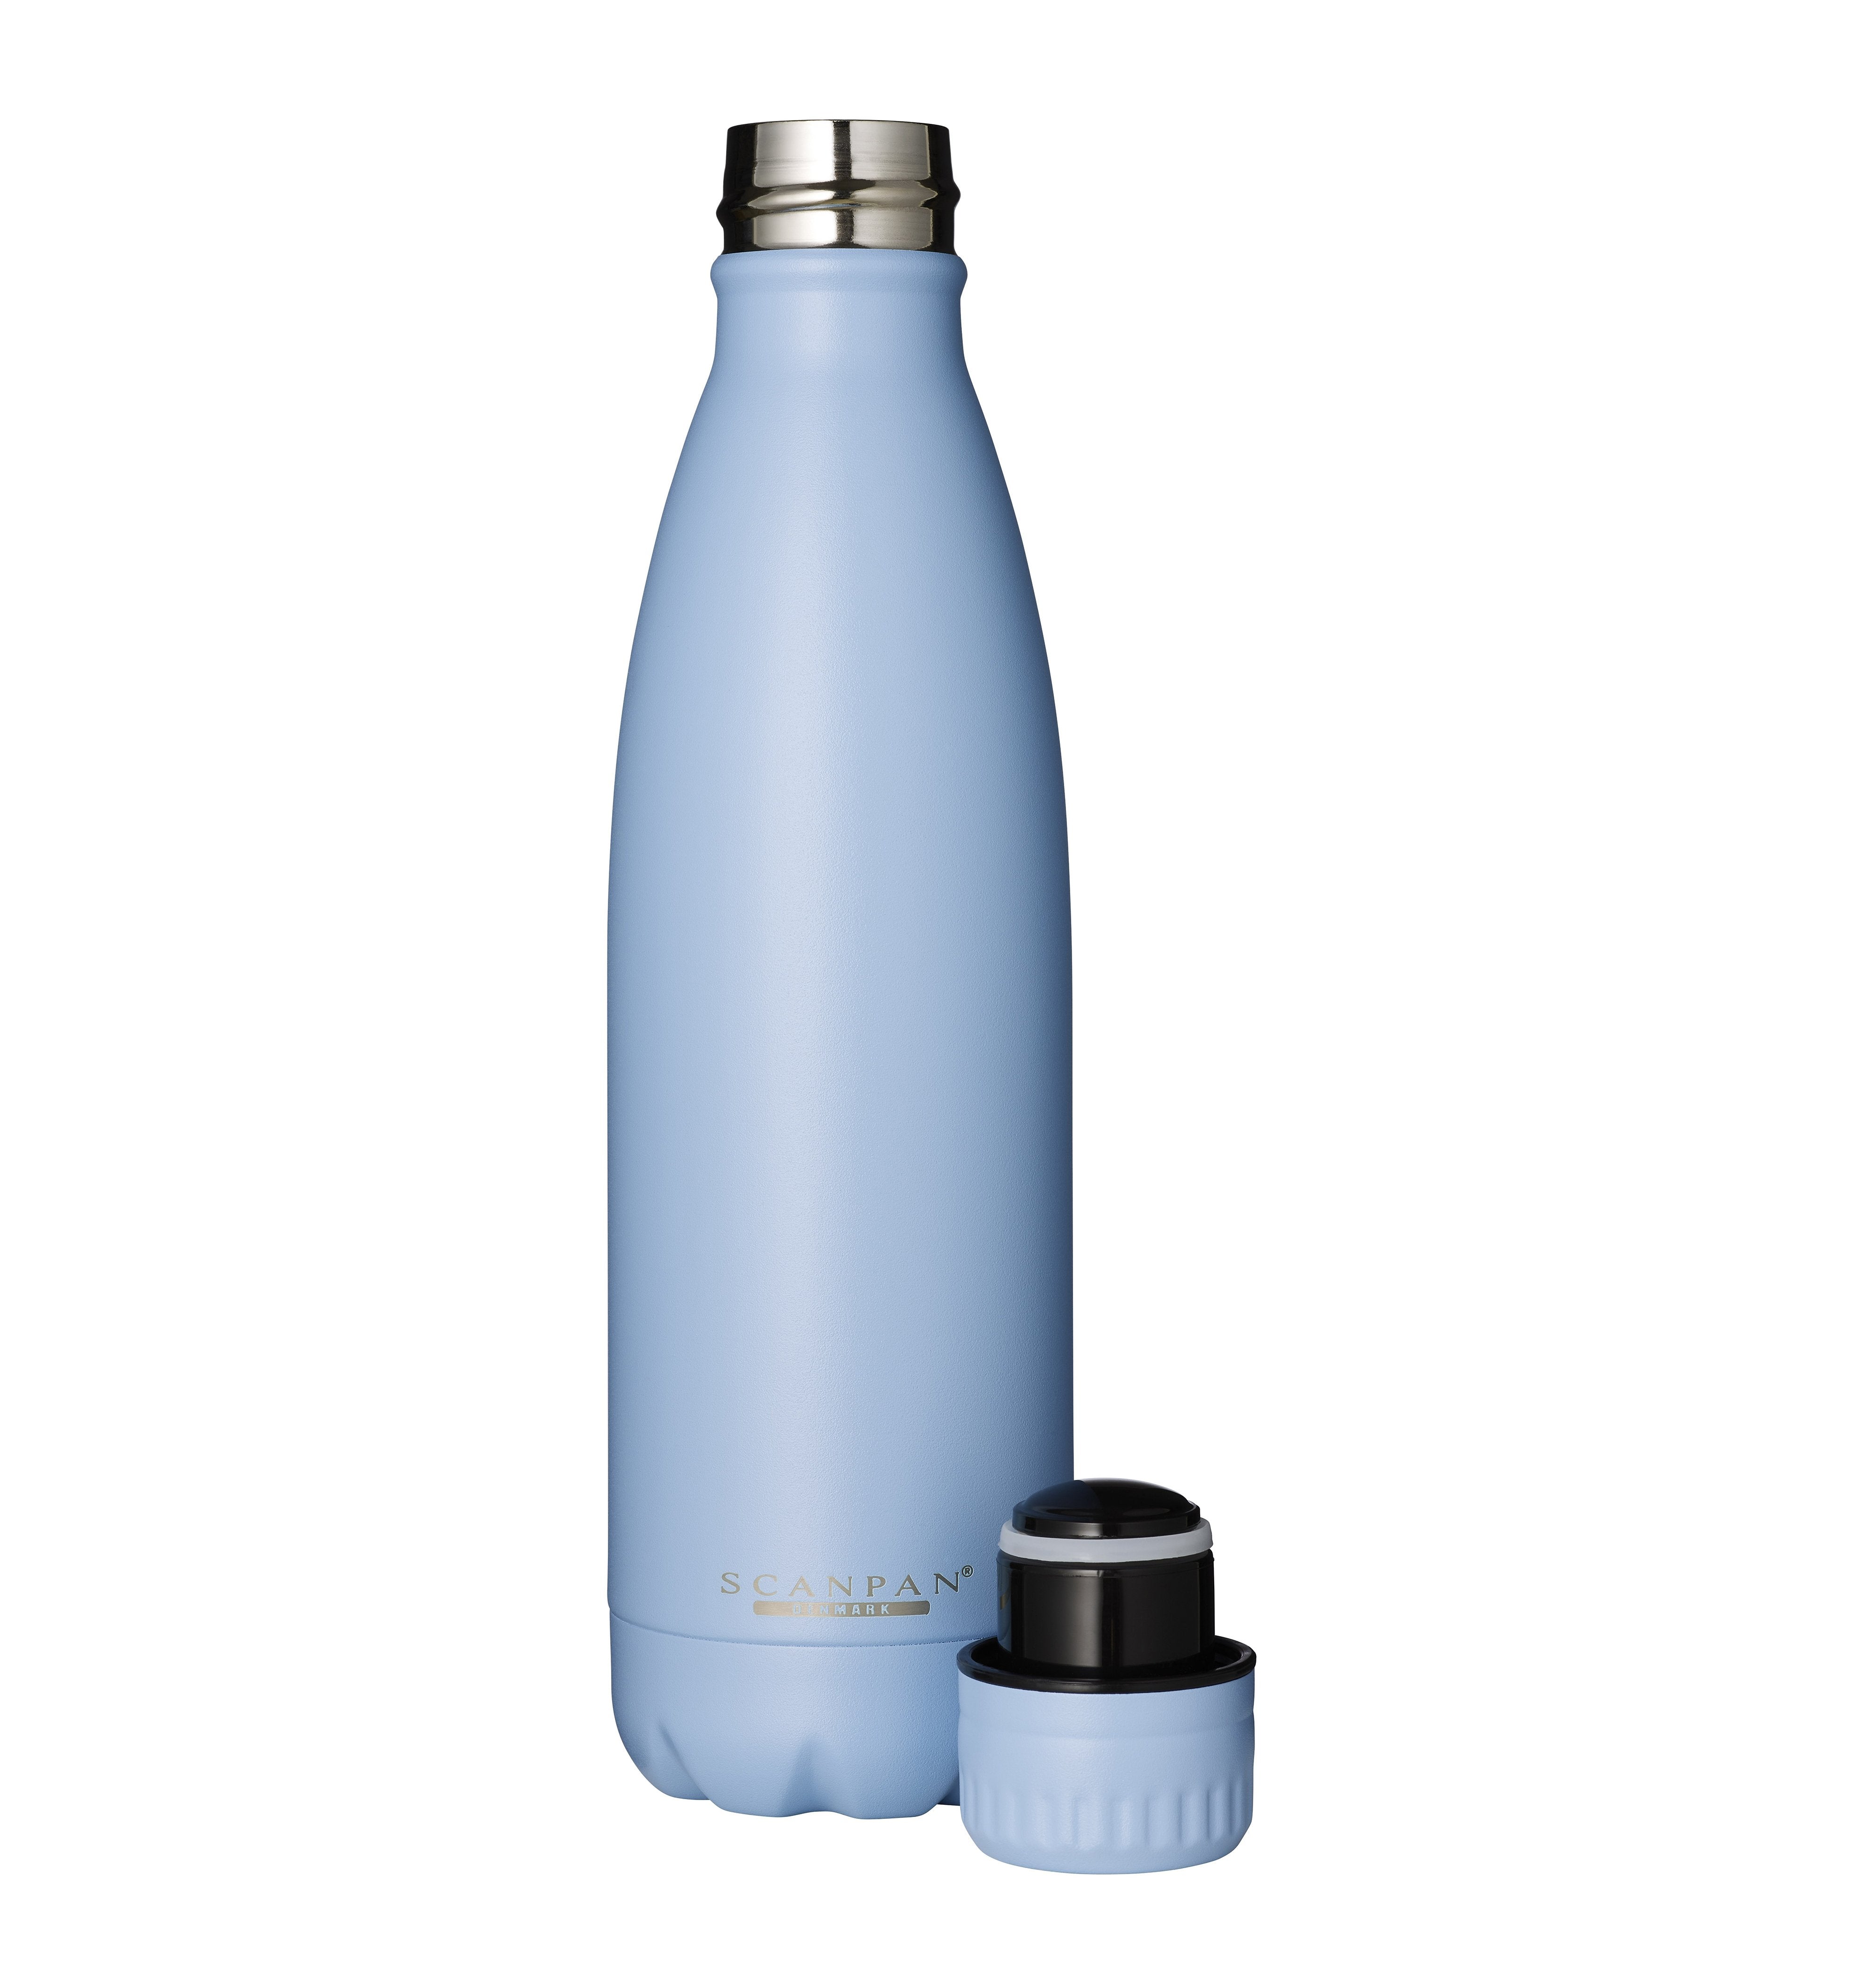 SCANPAN To Go 500ml Bottle - Airy Blue